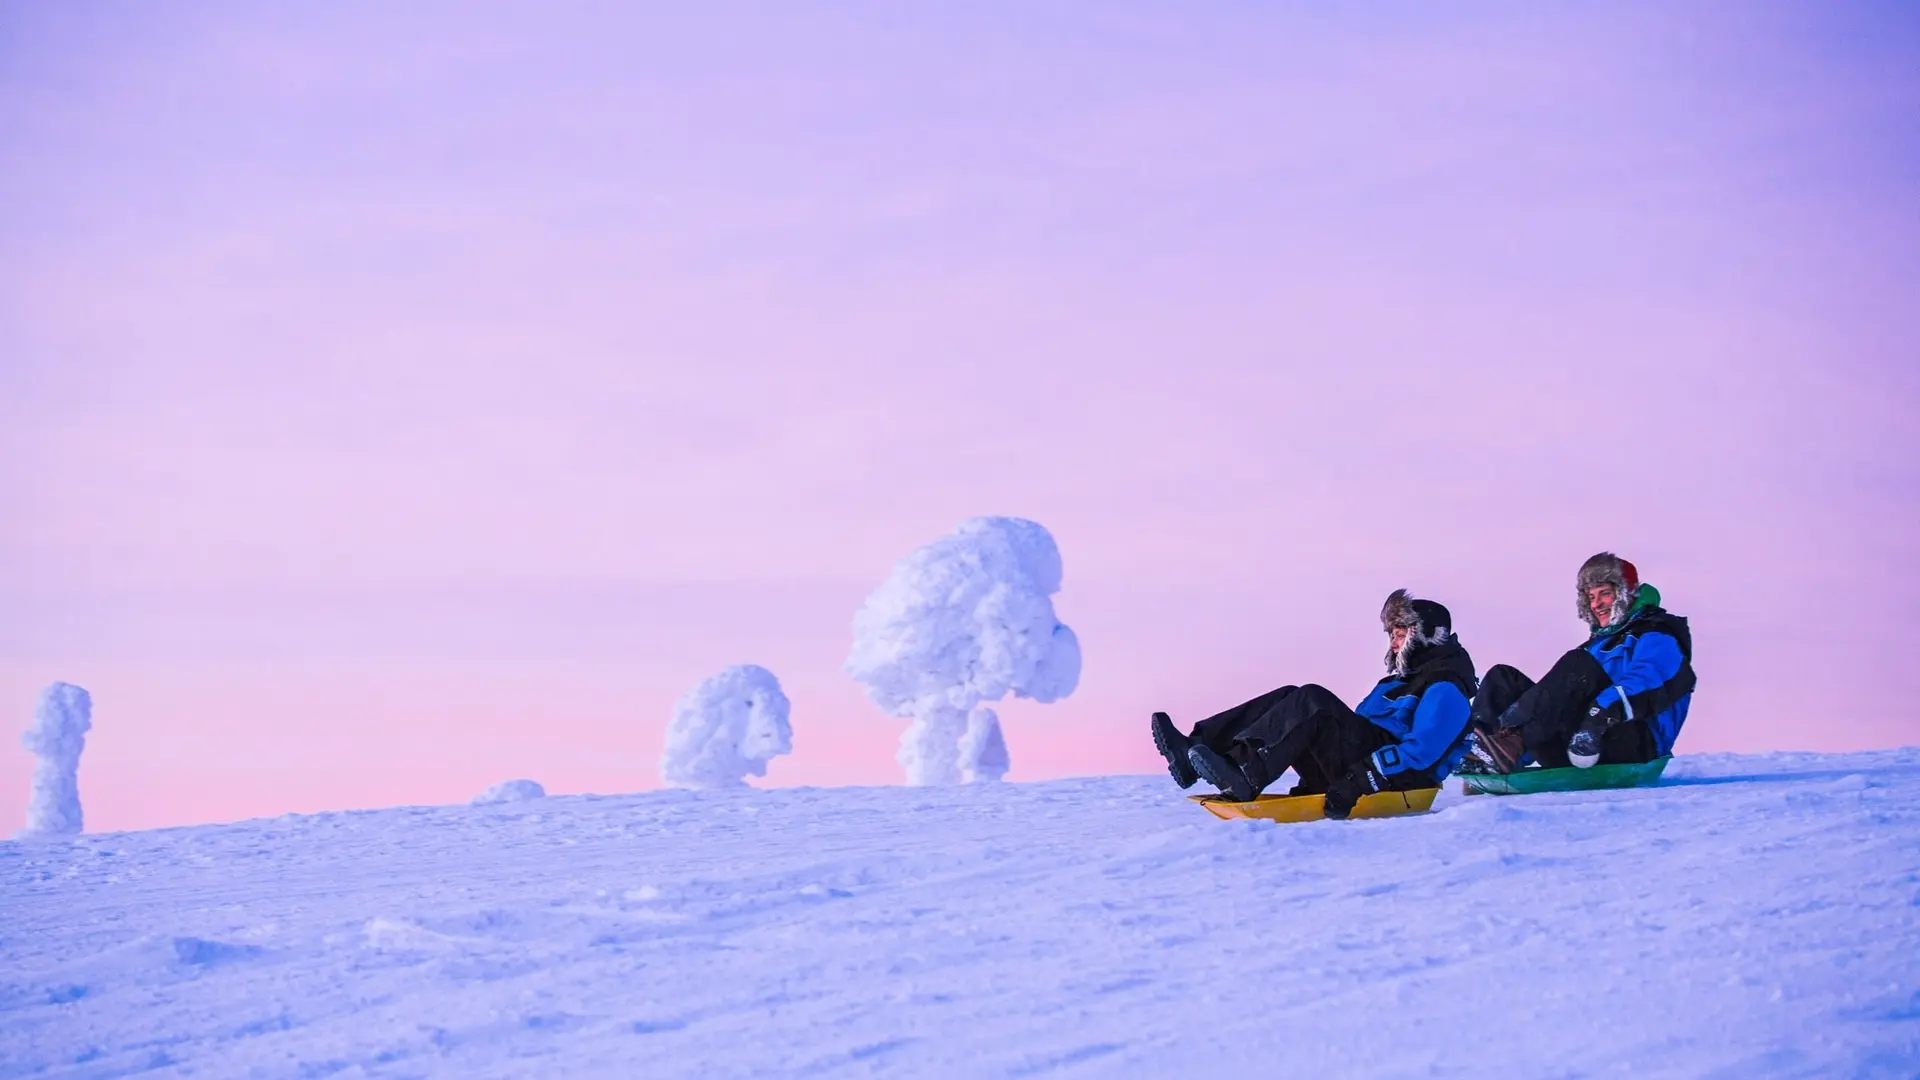 Kakslauttanen Arctic Resort - Igloos and Chalets